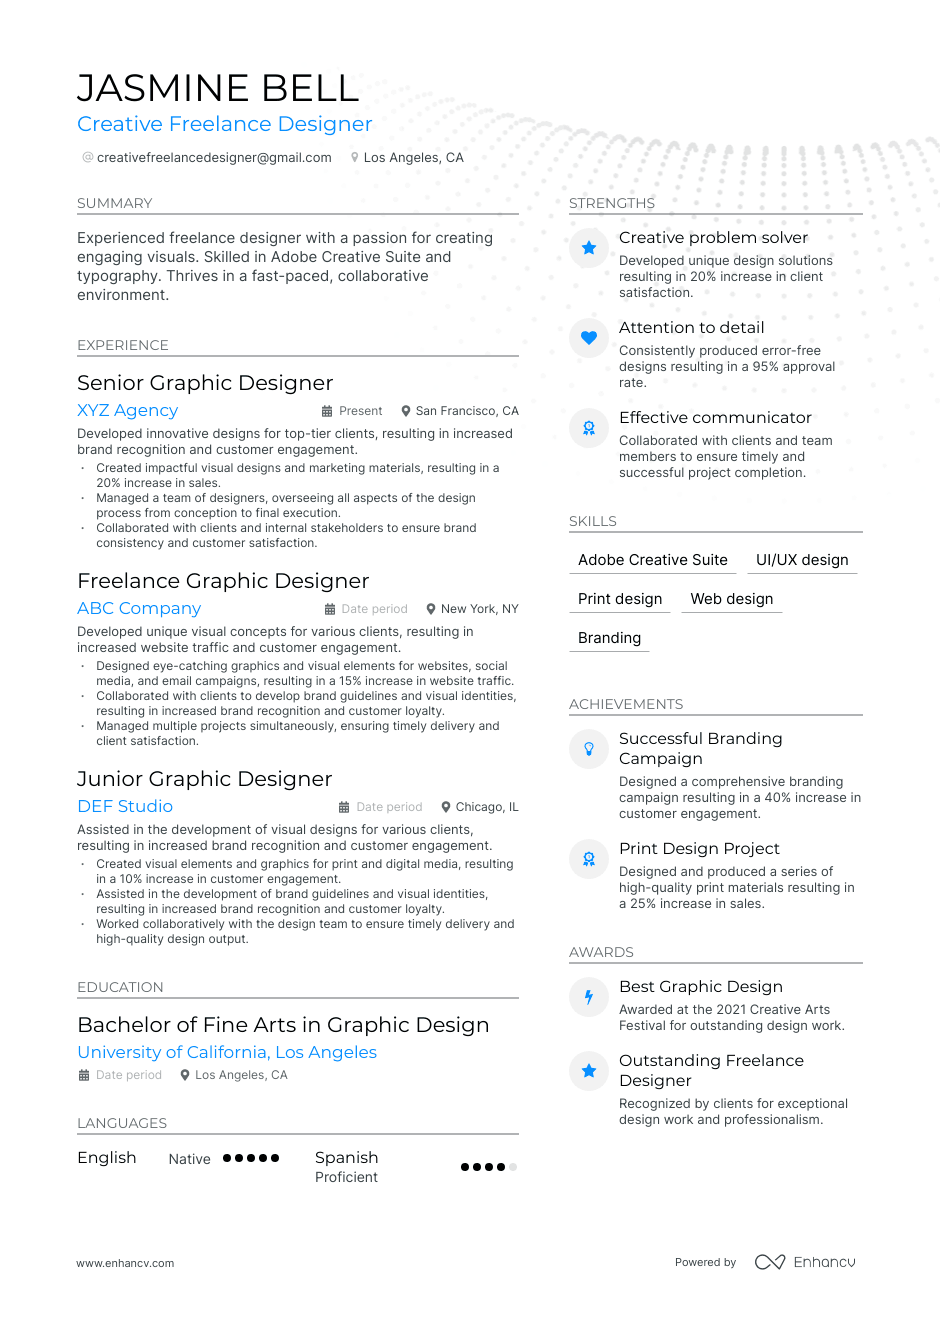 Freelance Designer resume example